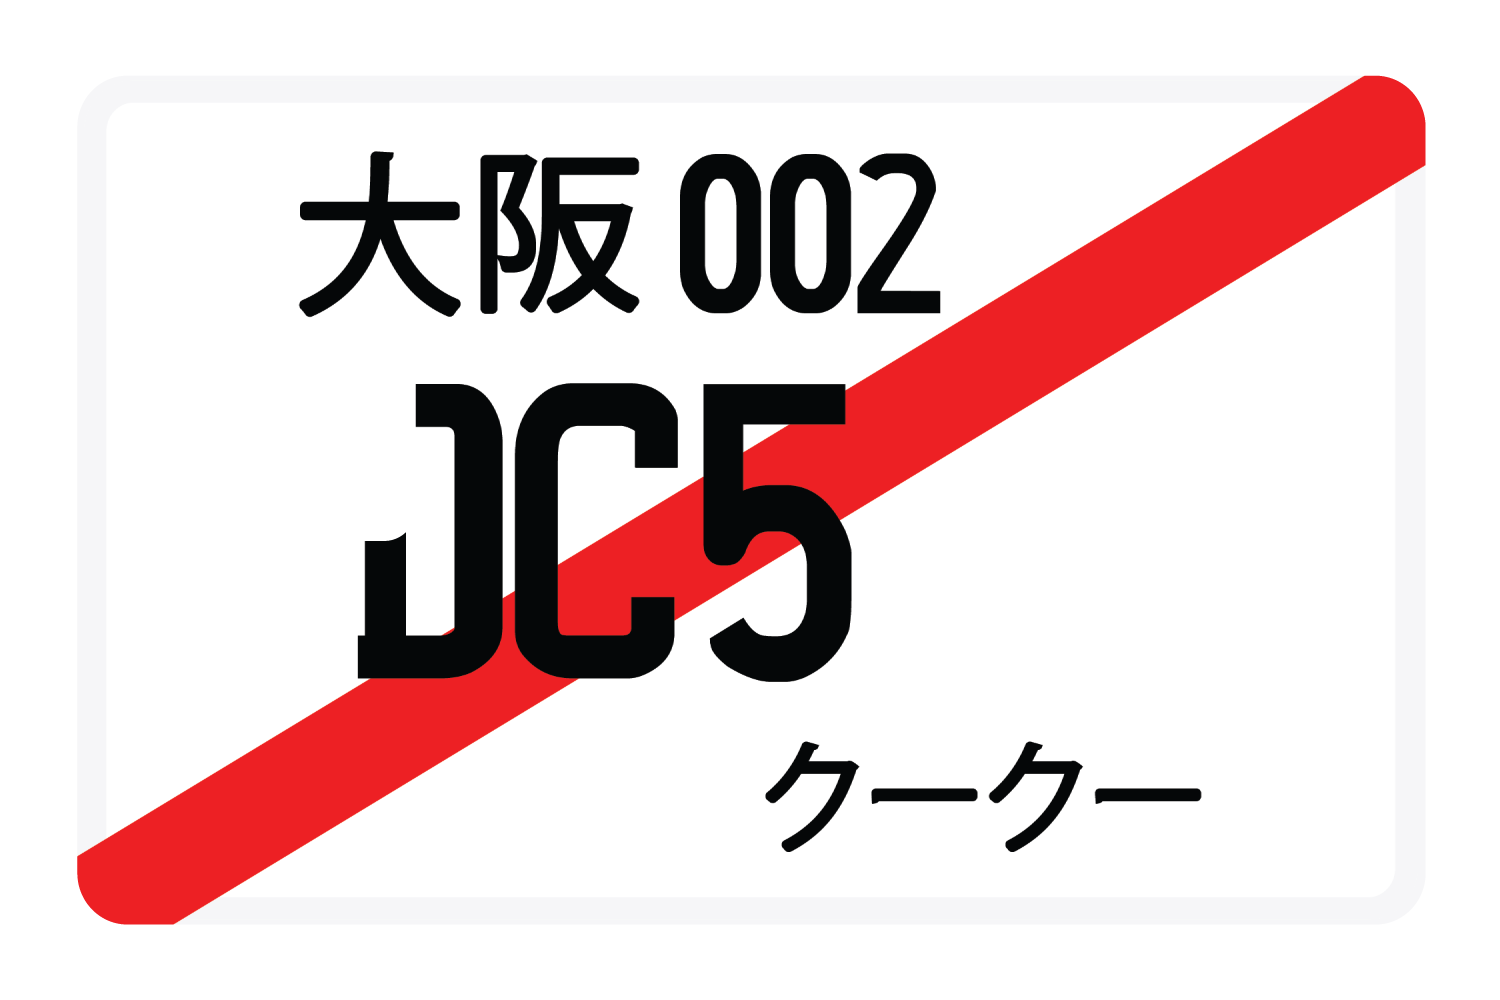 DC5